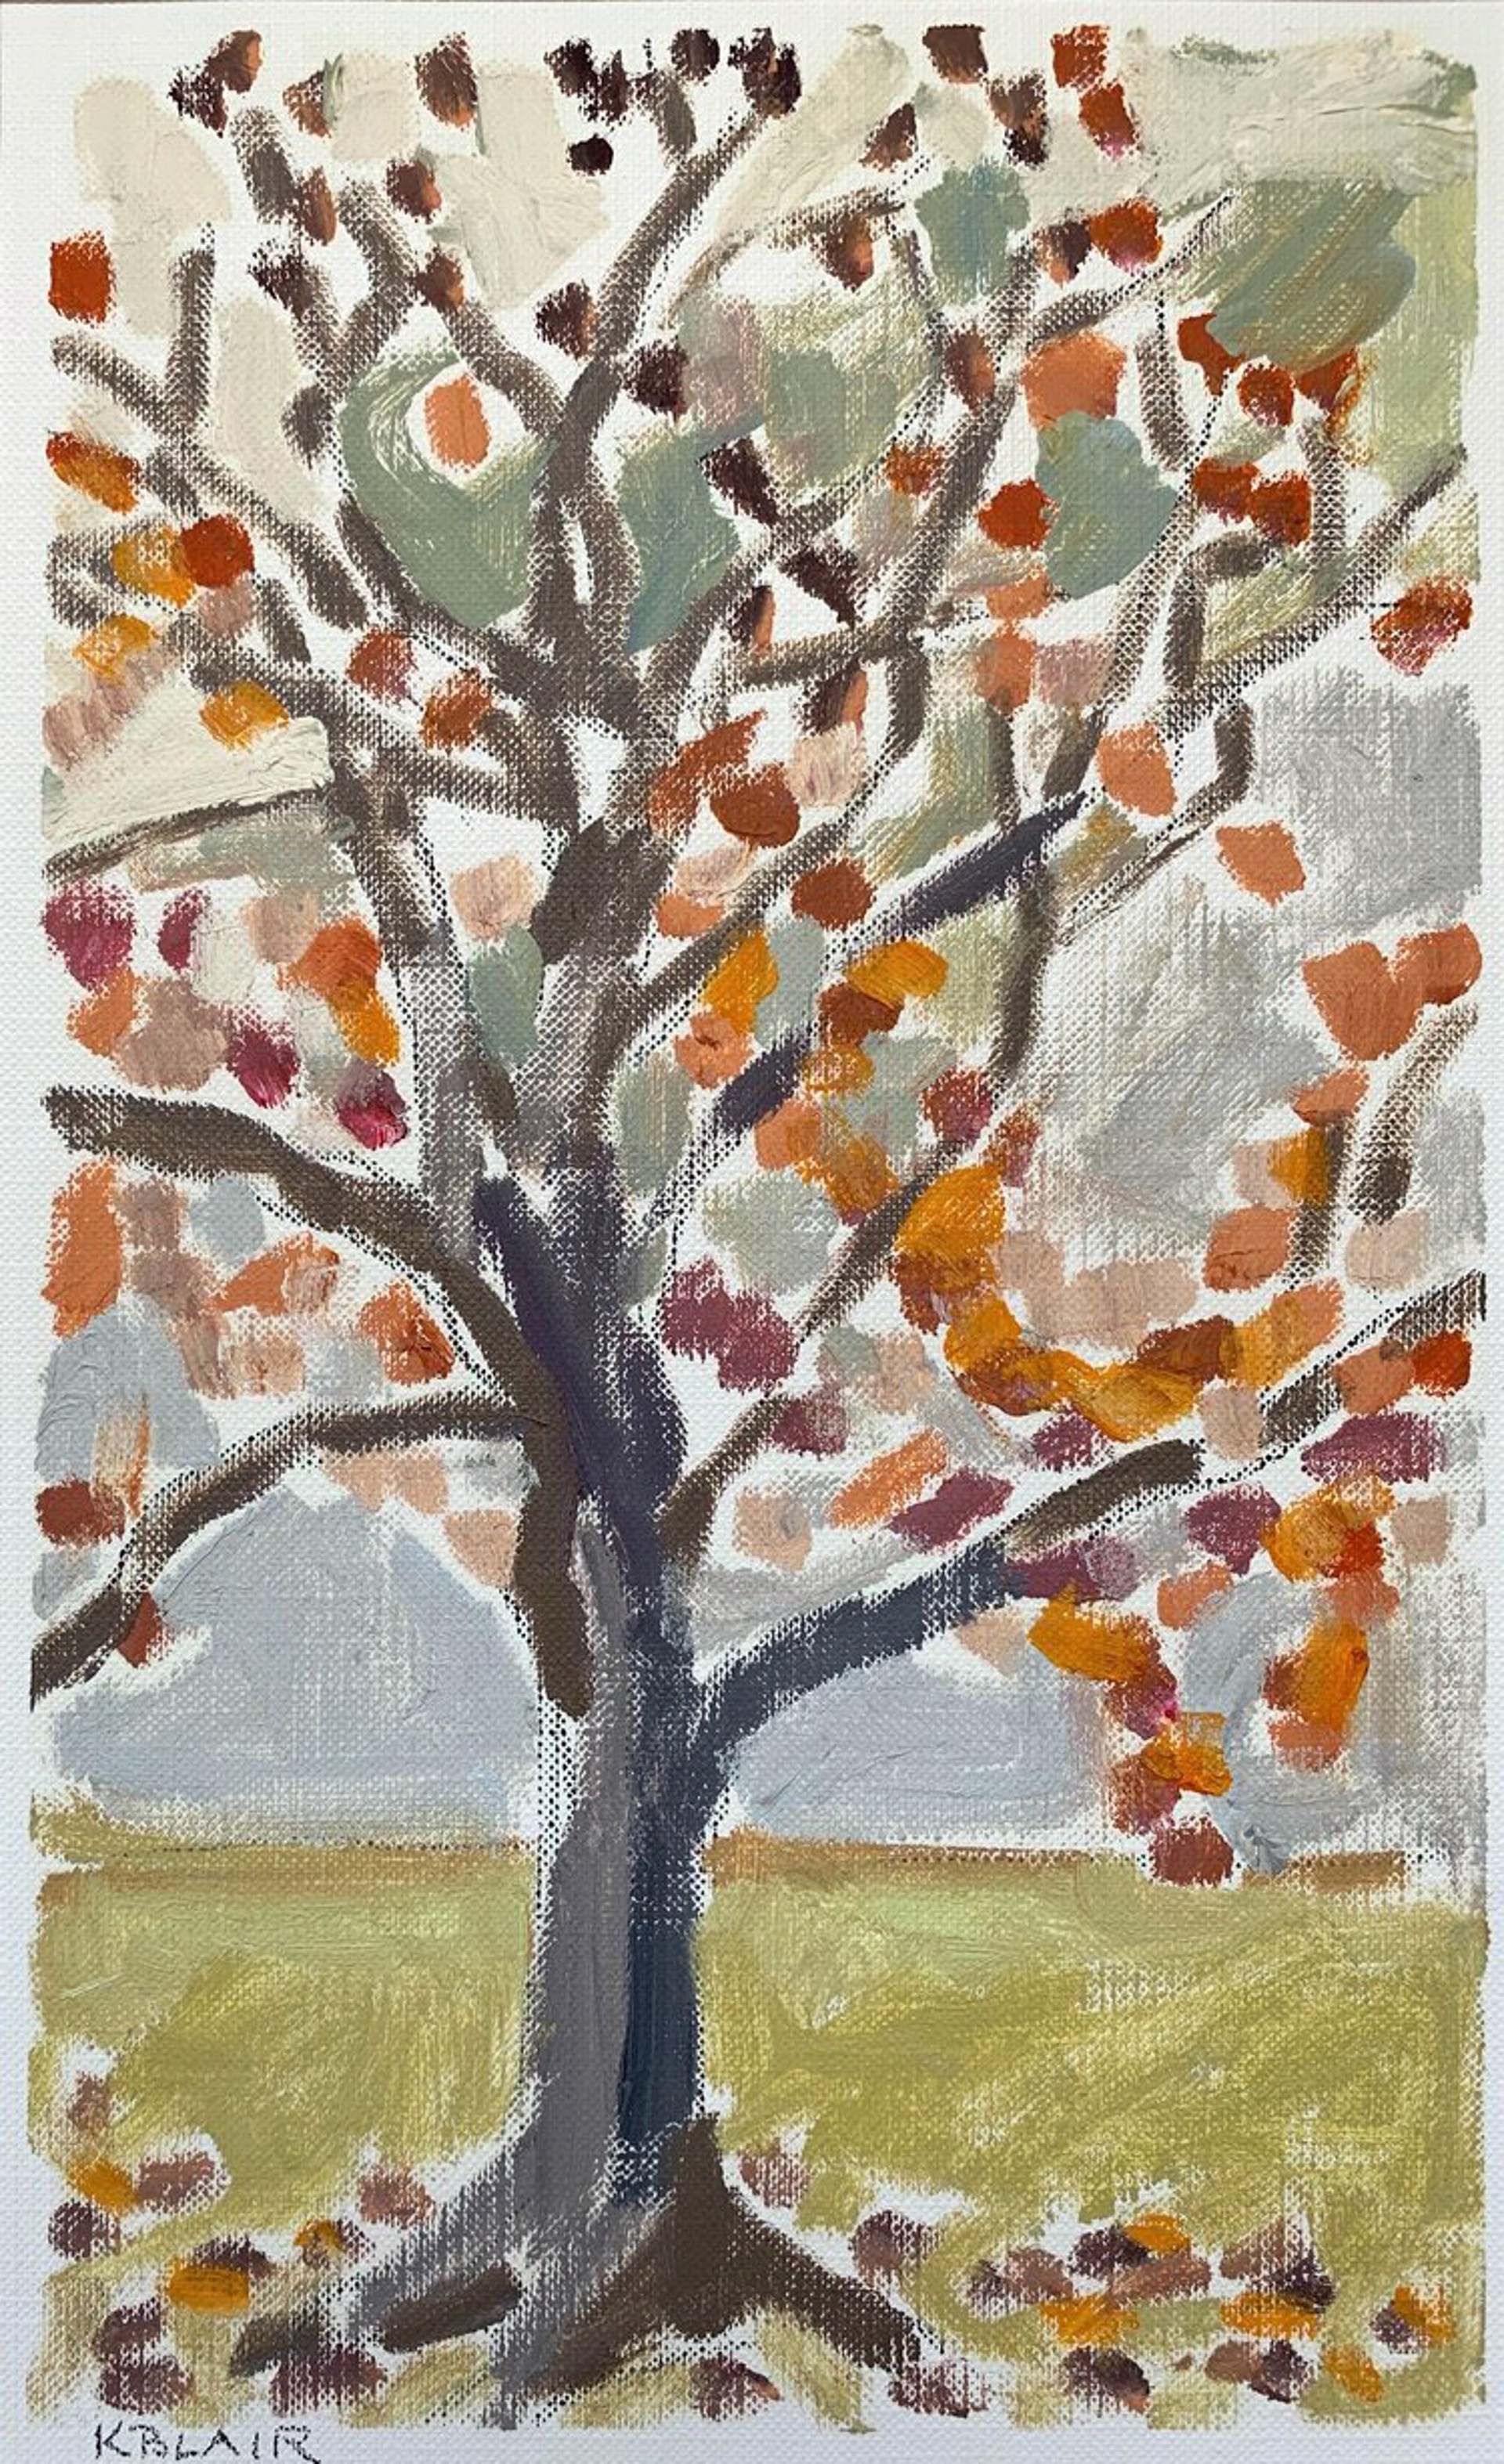 Small Tree I by Karen Blair